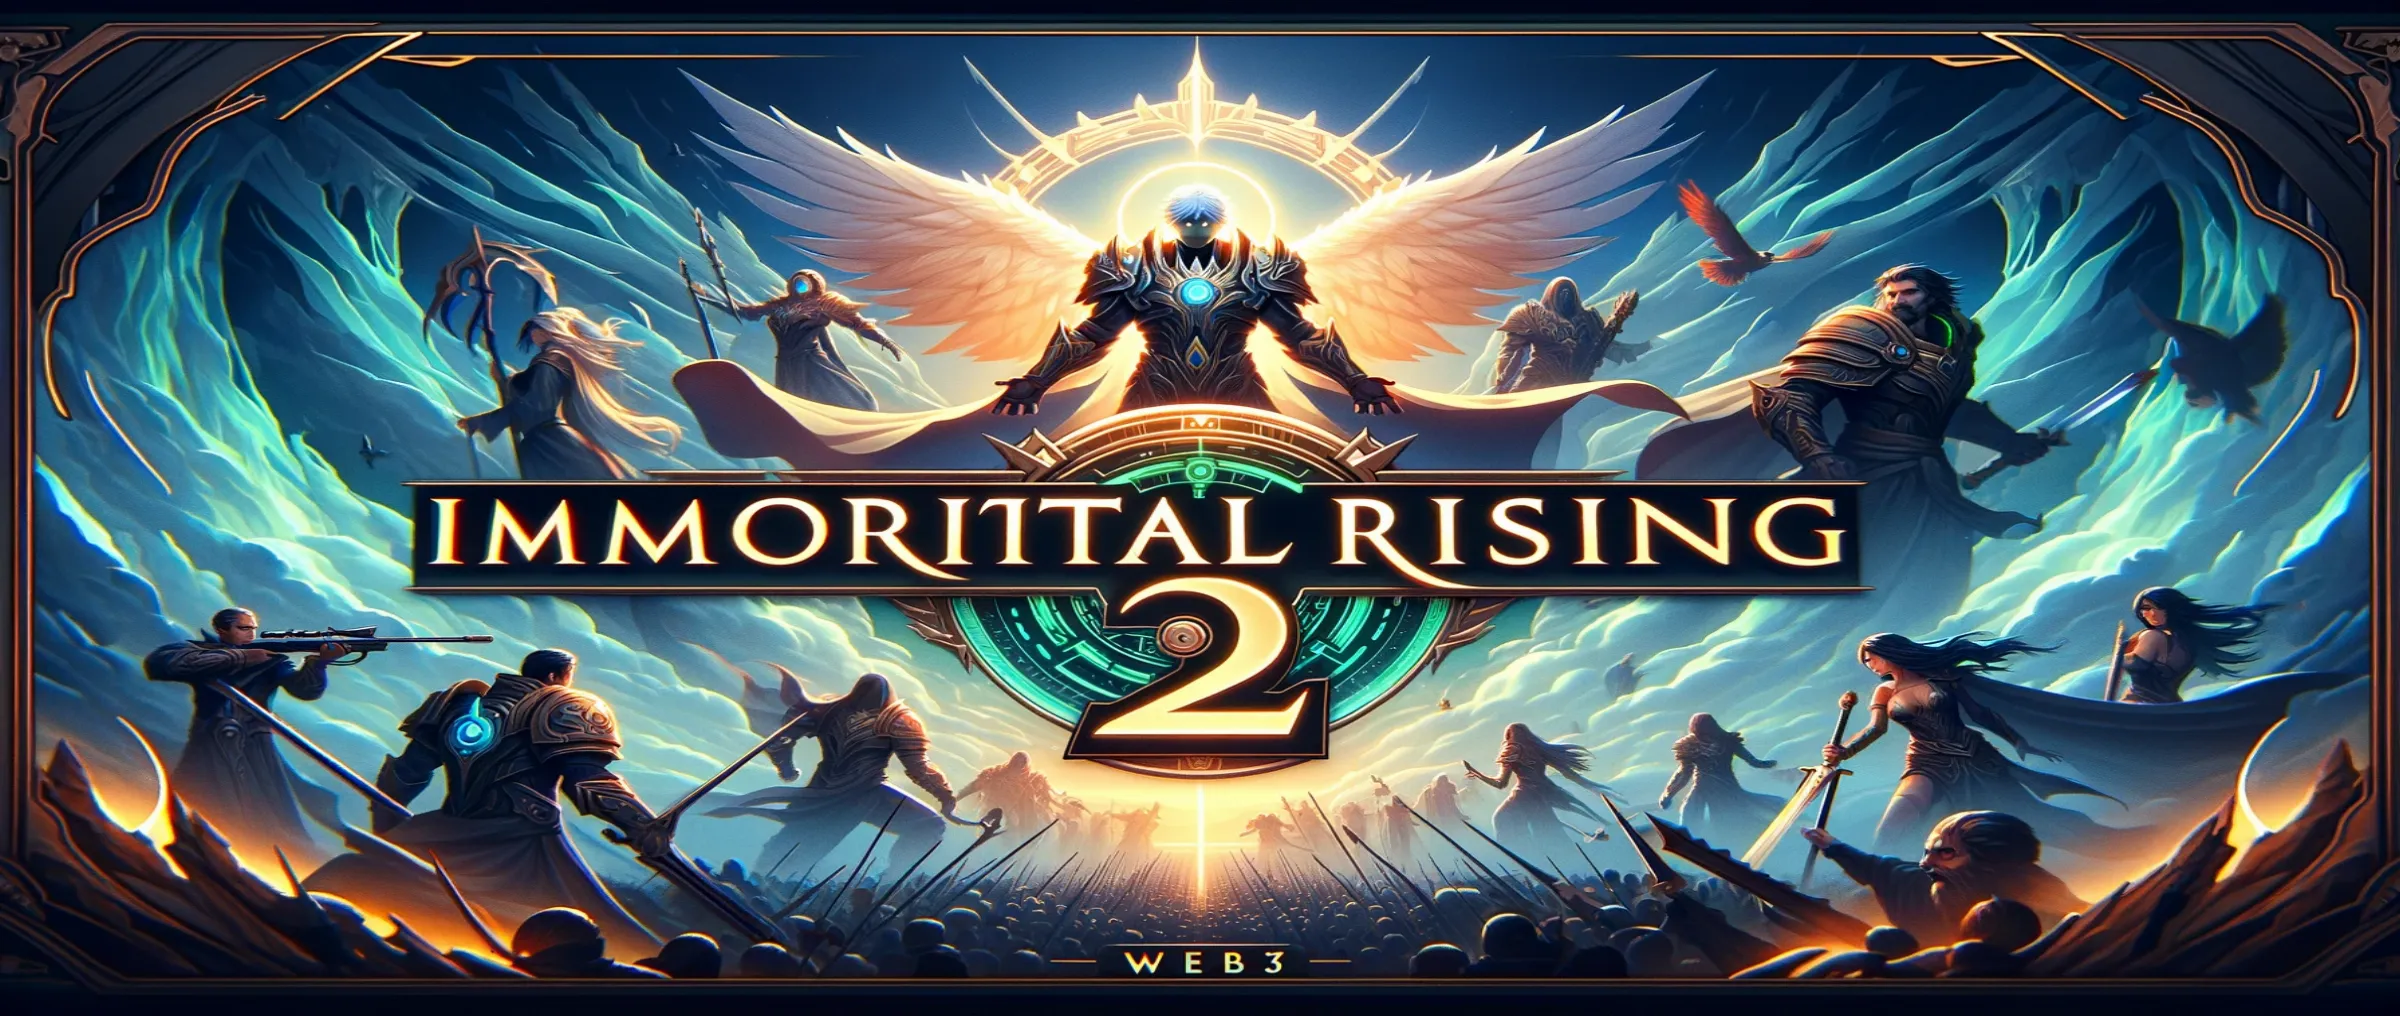 Immortal Rising 2: Web3 RPG Venture by Planetarium Labs and Bad Beans